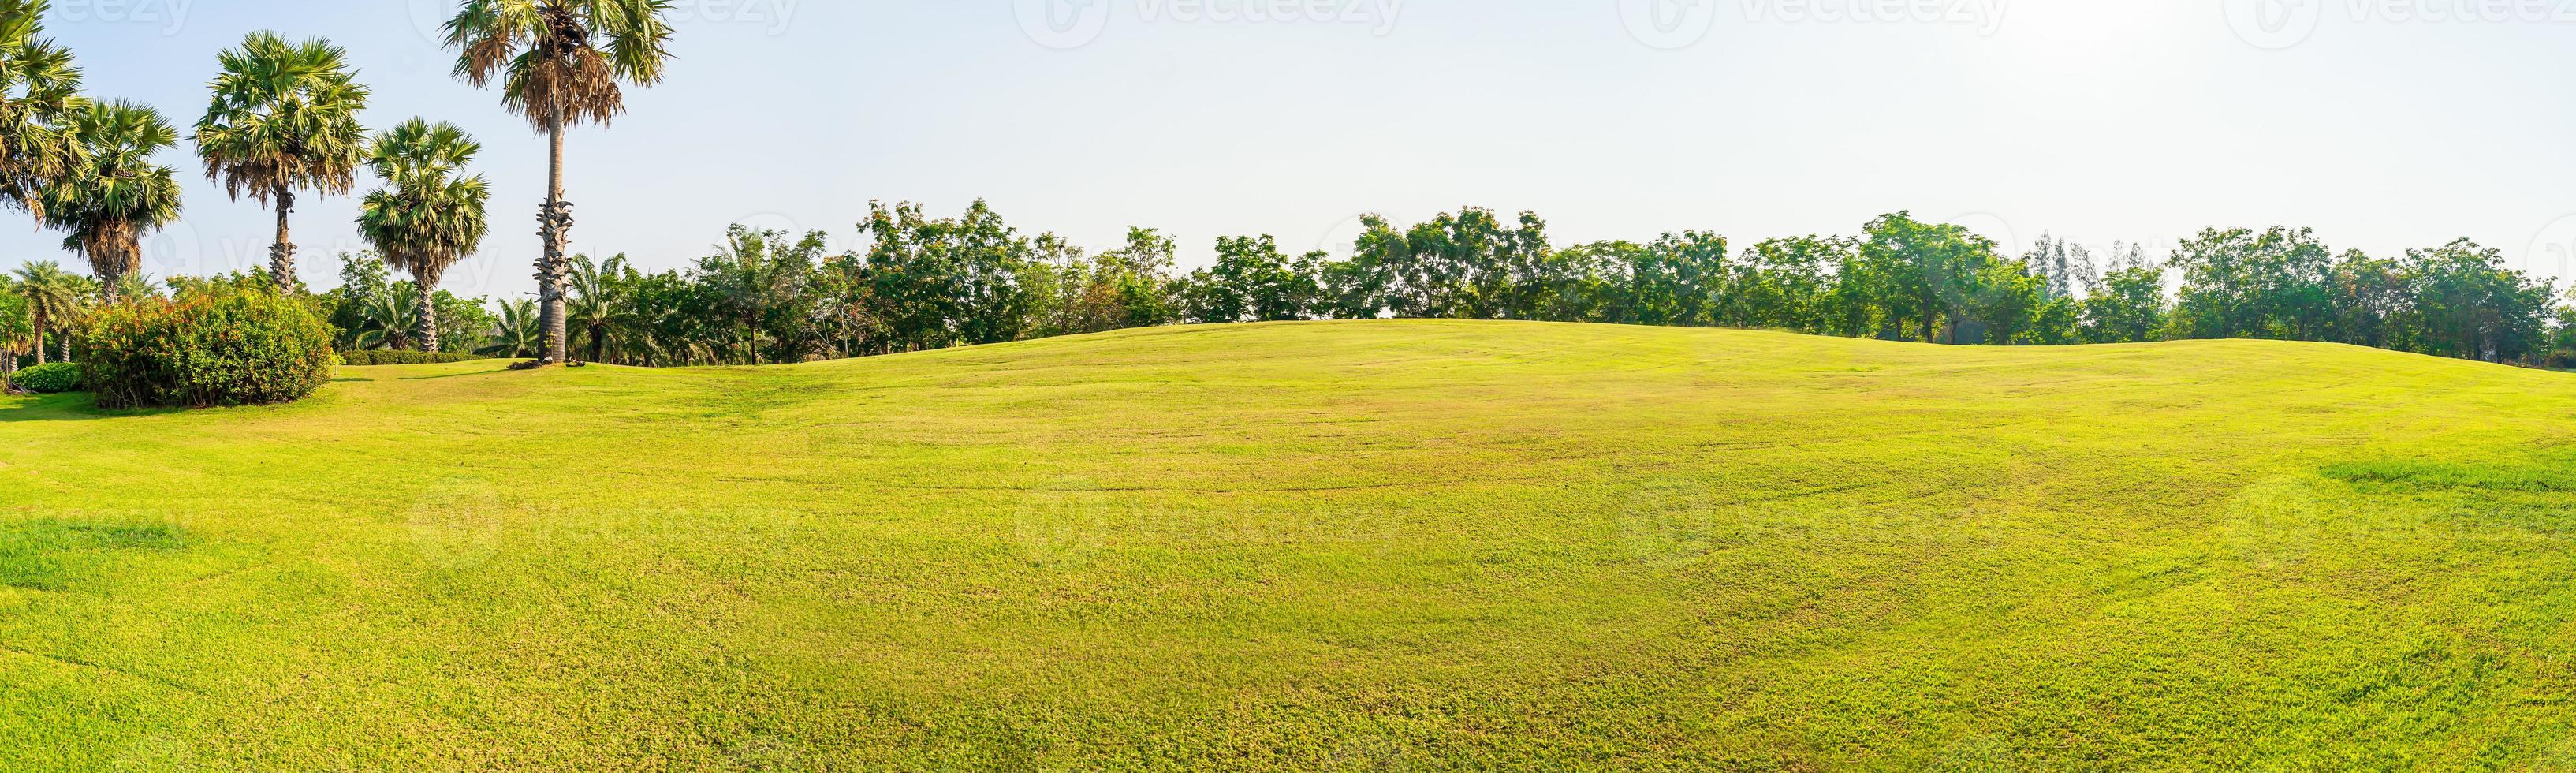 panorama herbe verte sur un terrain de golf photo